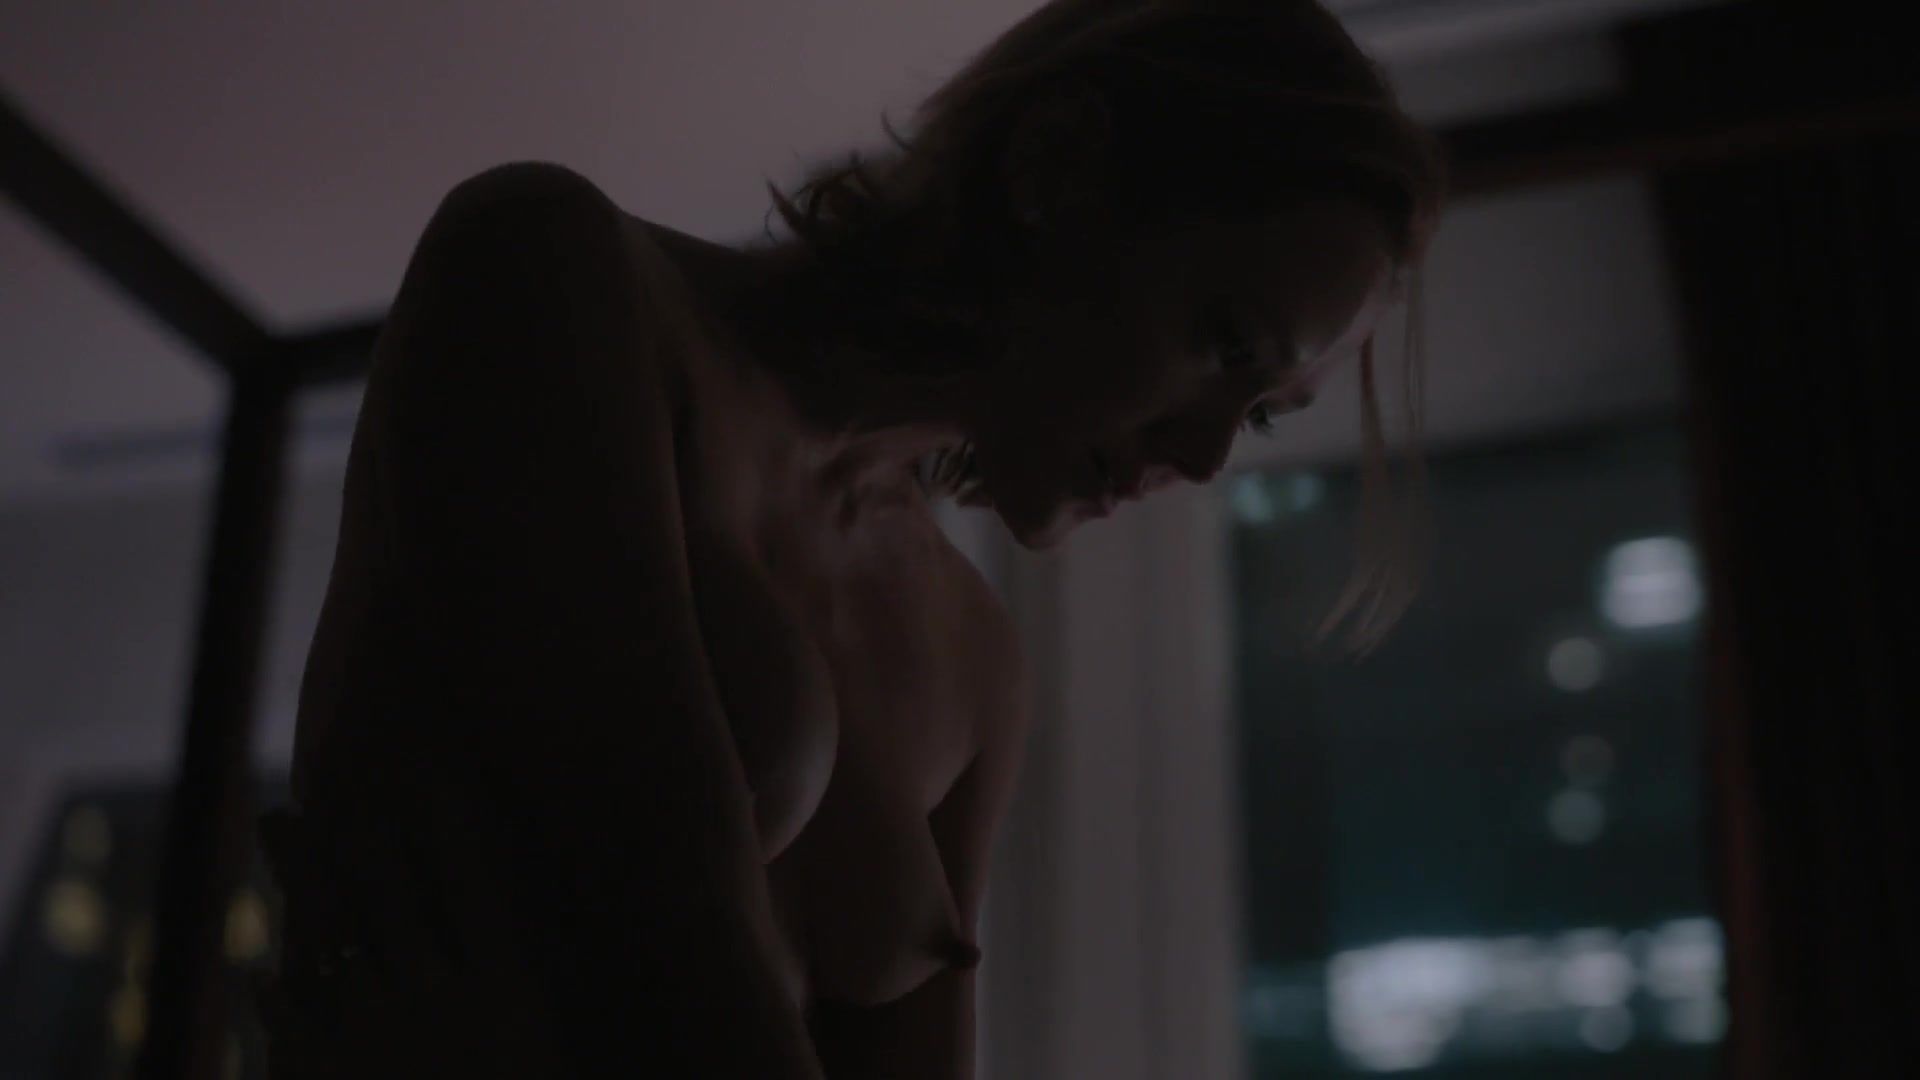 Red Head Louisa Krause Nude - The Girlfriend Experience s02e11 (2017) DarkPanthera